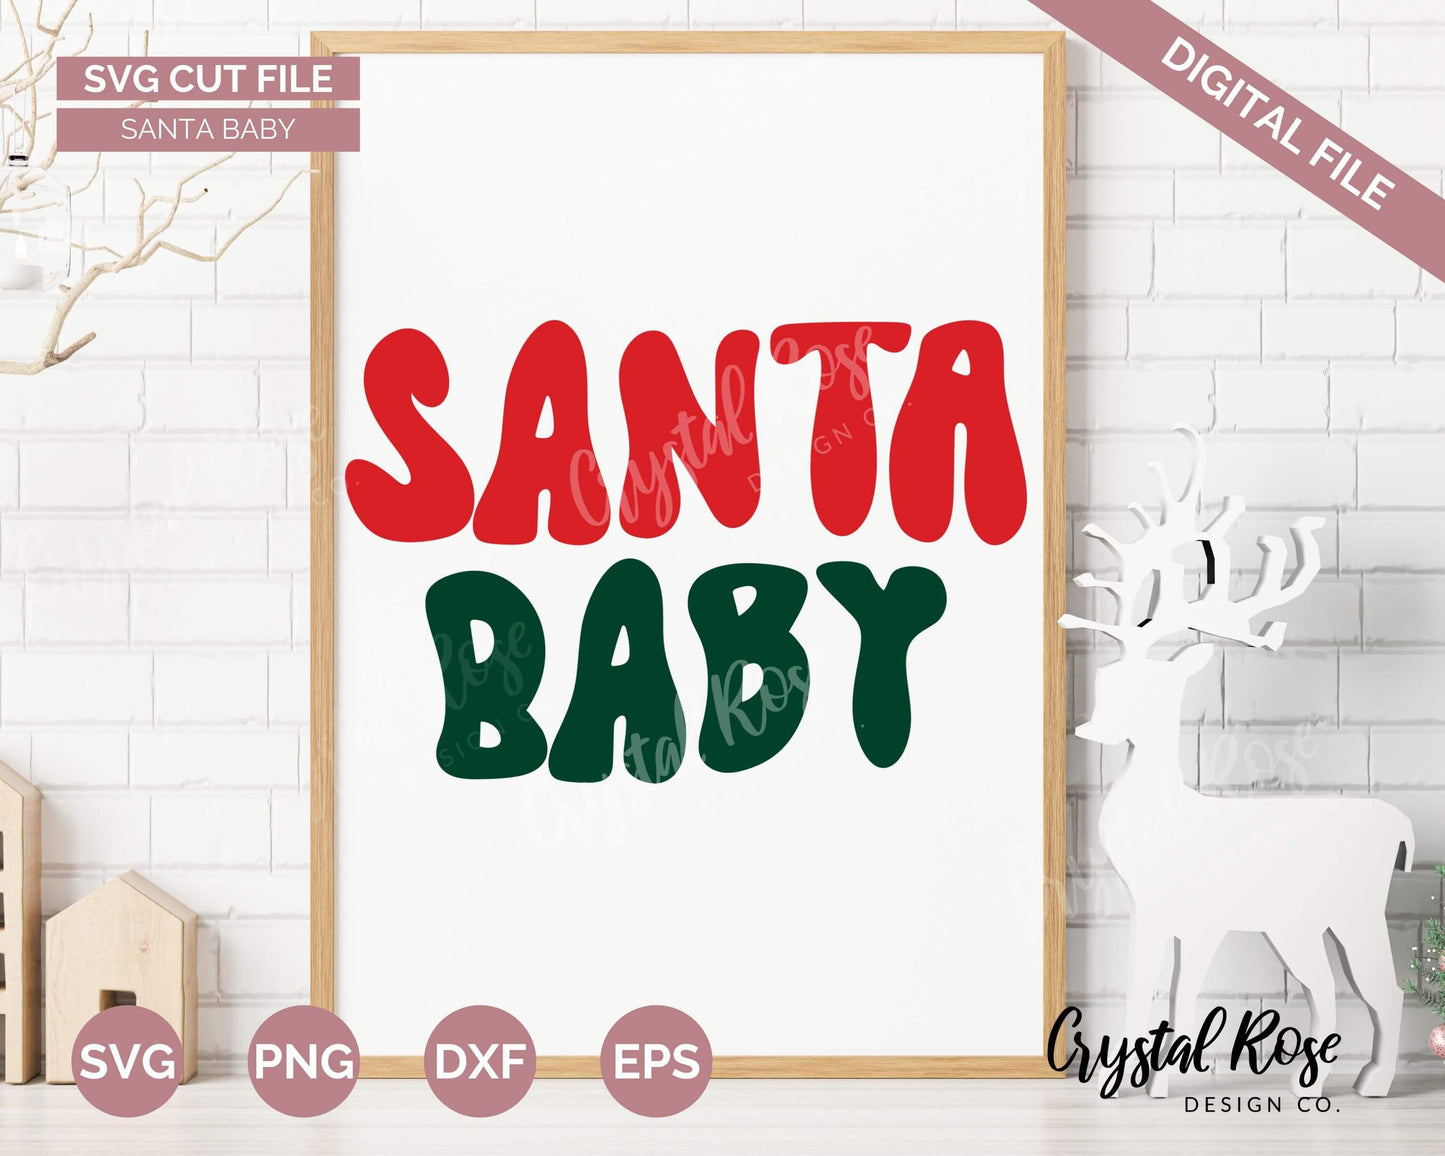 Retro Santa Baby SVG, Christmas SVG, Digital Download, Cricut, Silhouette, Glowforge (includes svg/png/dxf/eps)